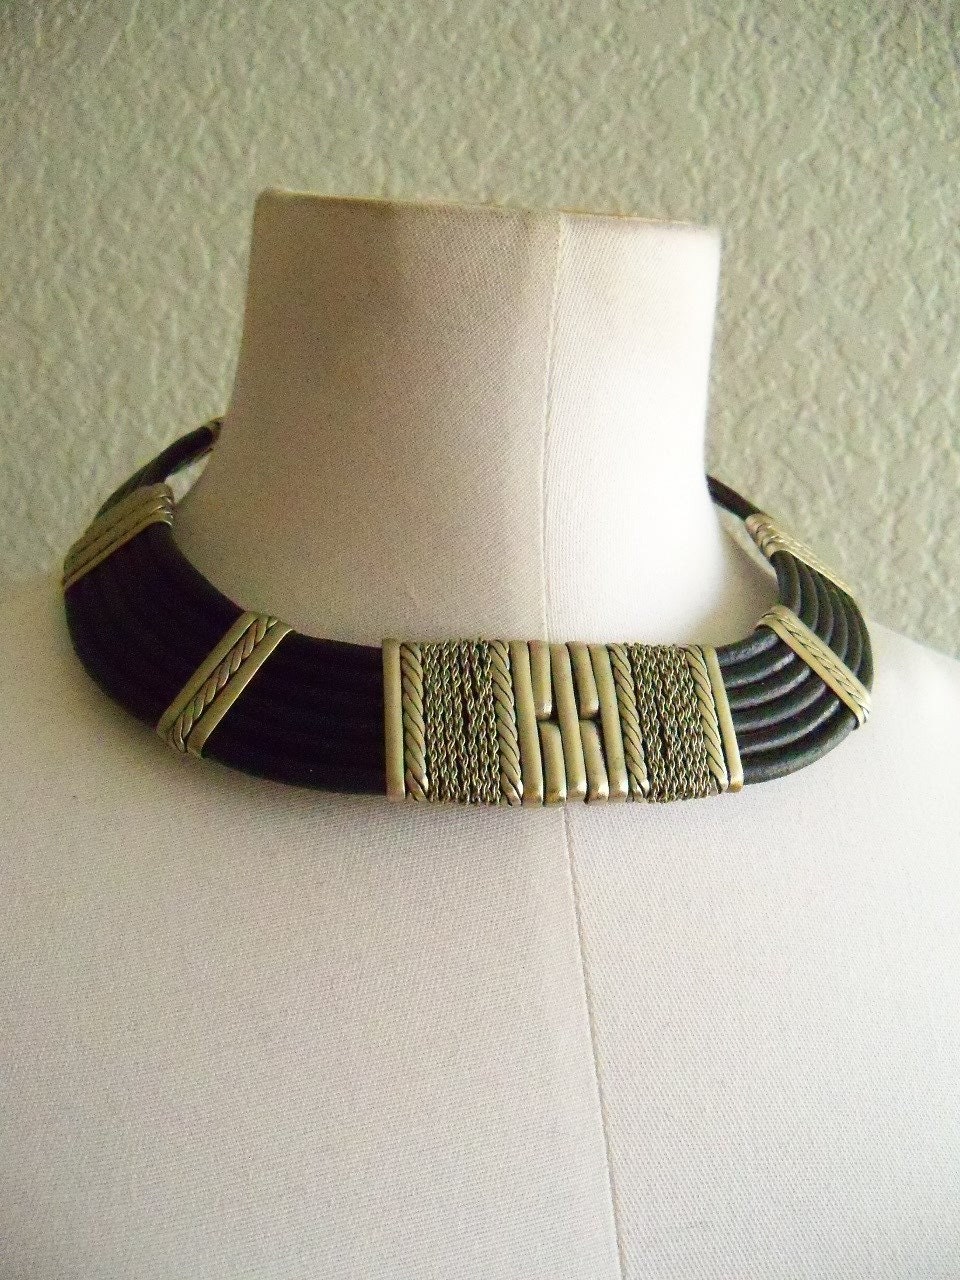 vintage 60s black leather and silvertone egyptian revival choker and bracelet set